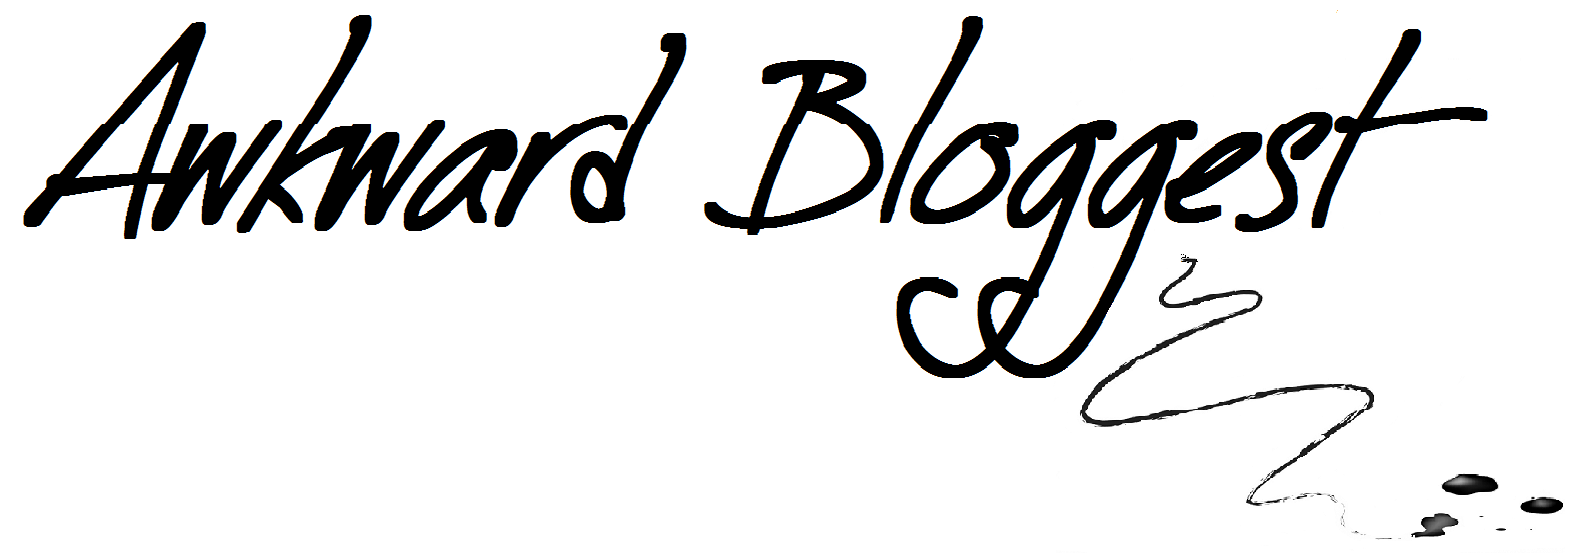 Awkward Bloggest